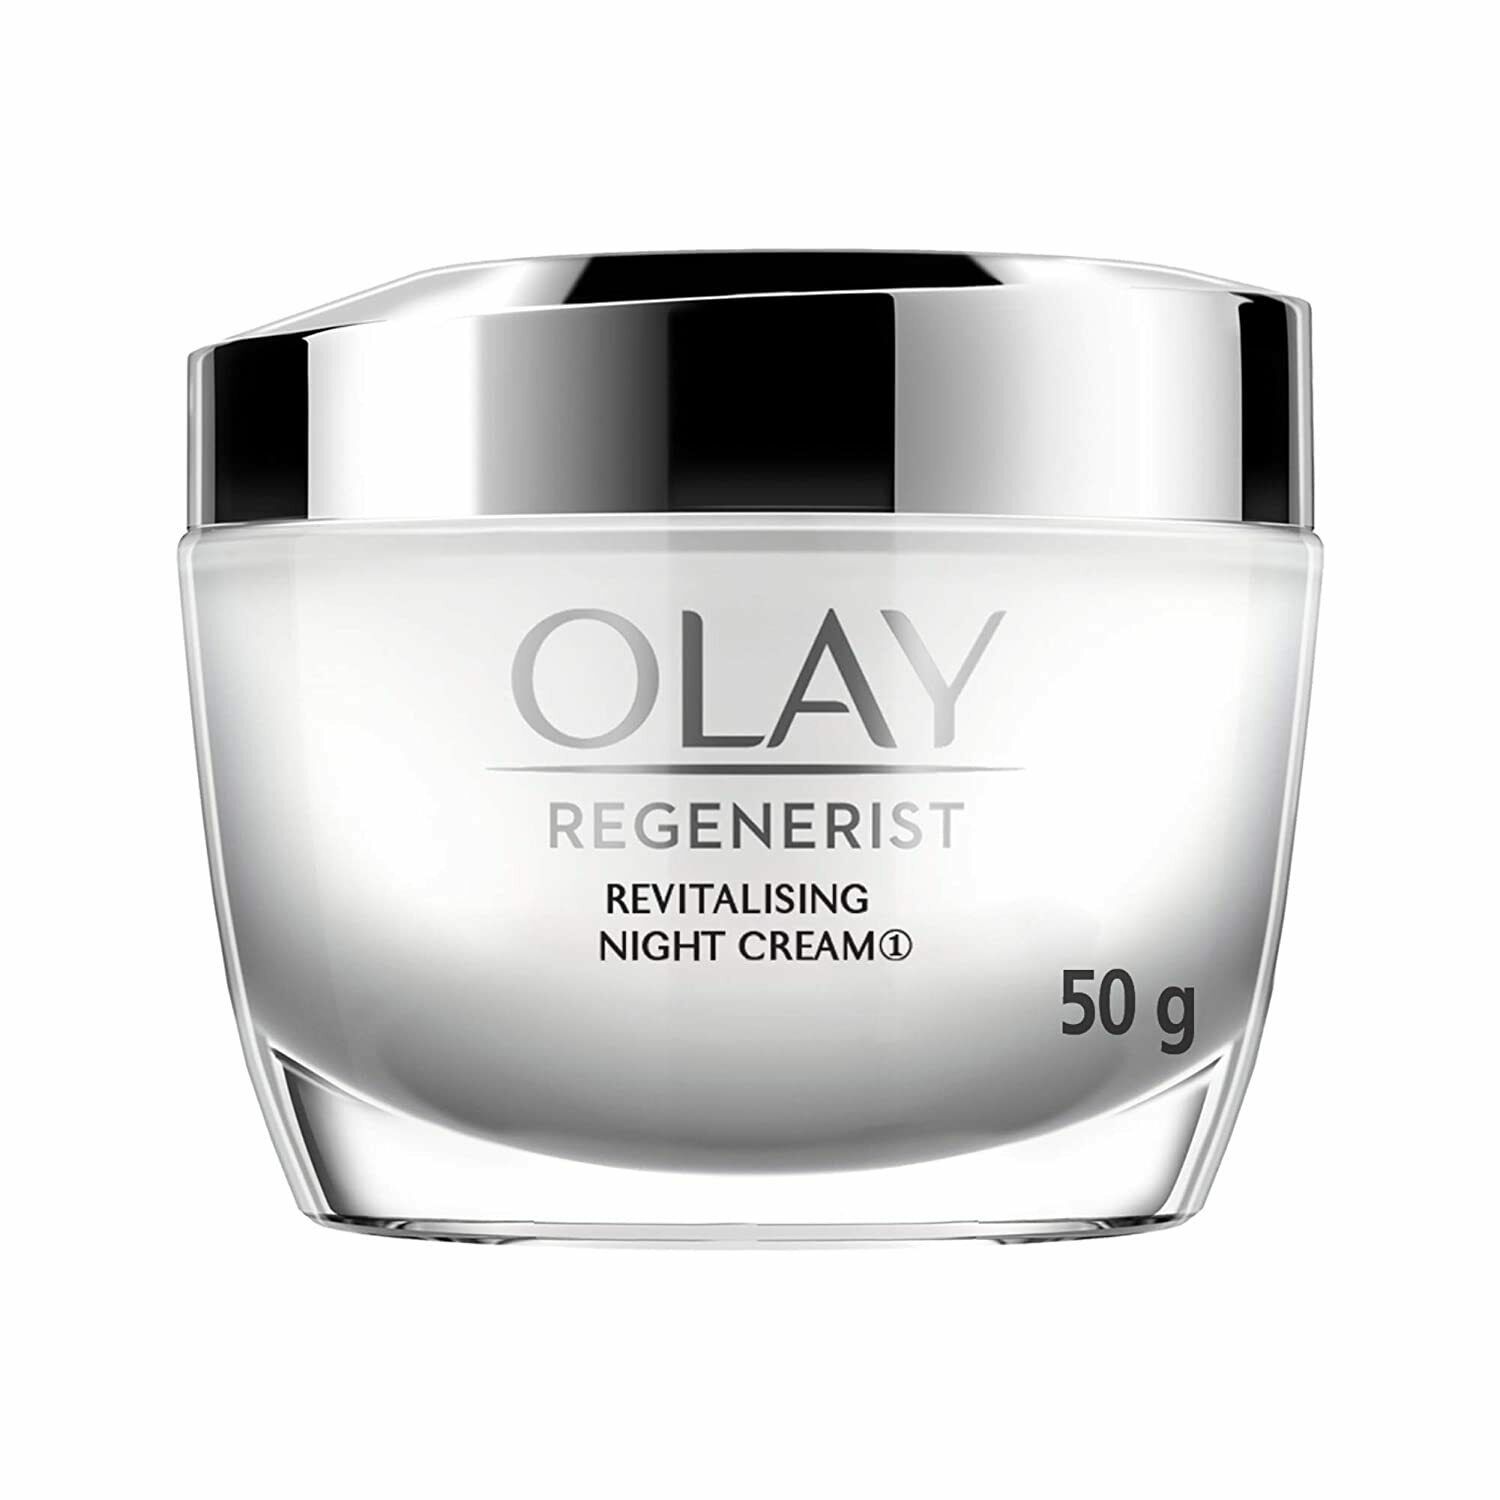 Olay Regenerist Night Cream with Hyaluronic Acid, Niacinamide & Pentapeptides50g